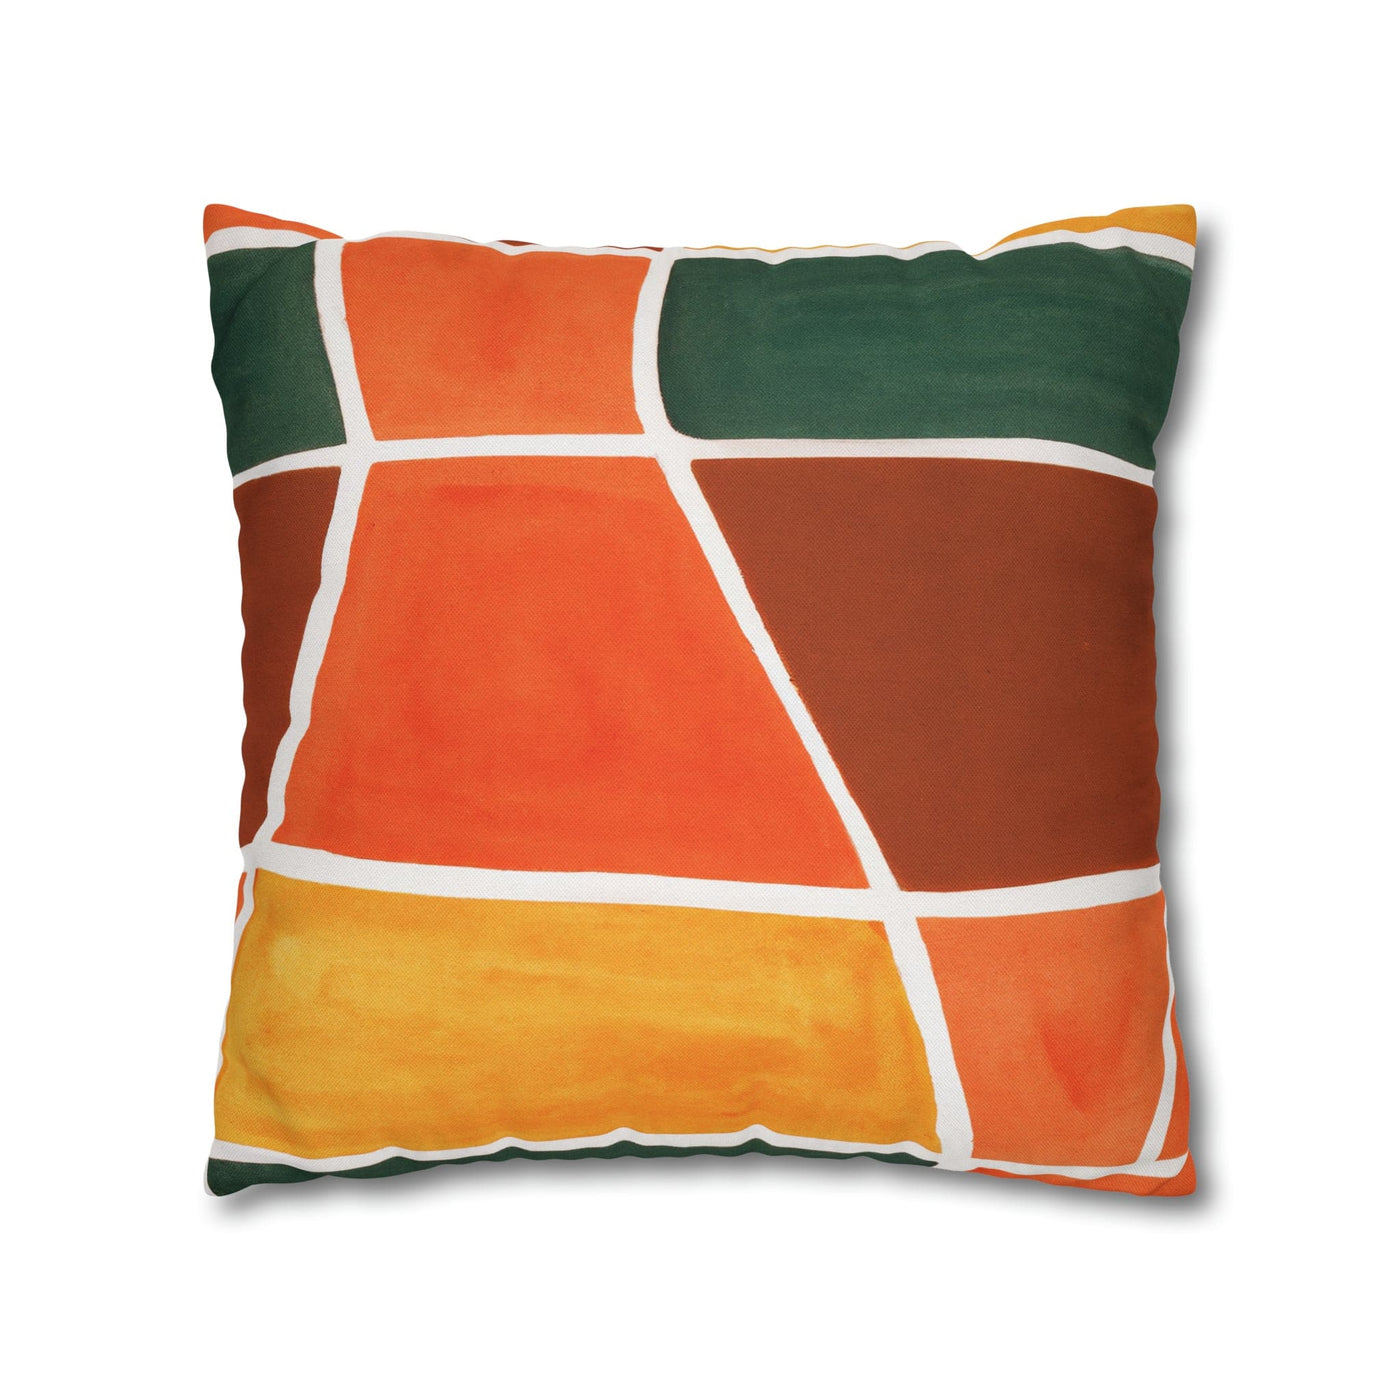 Decorative Throw Pillow Covers With Zipper - Set Of 2 Orange Green Yellow Boho